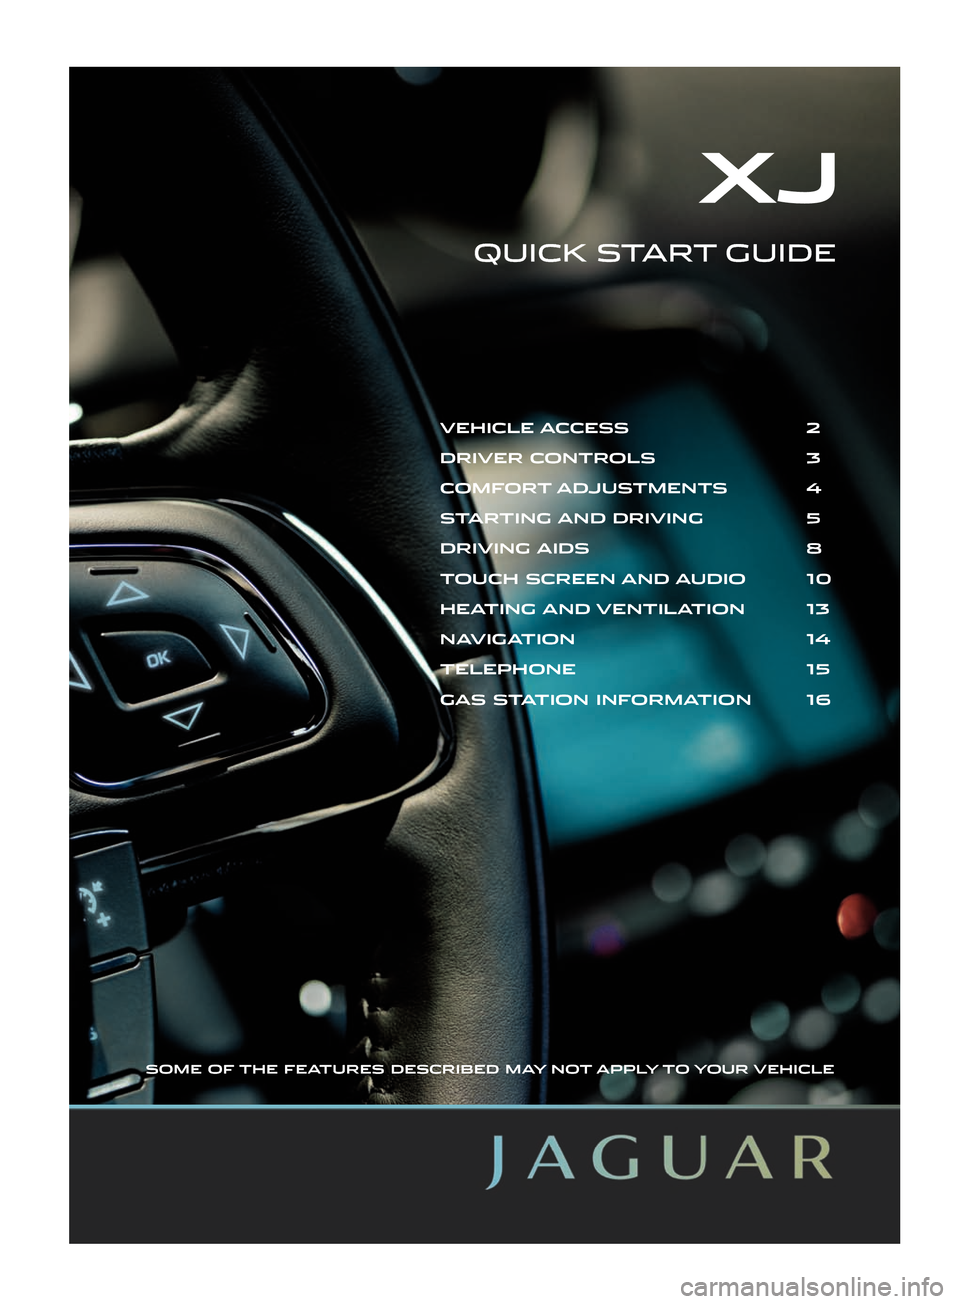 JAGUAR XJ 2012 X351 / 4.G Quick Start Guide 